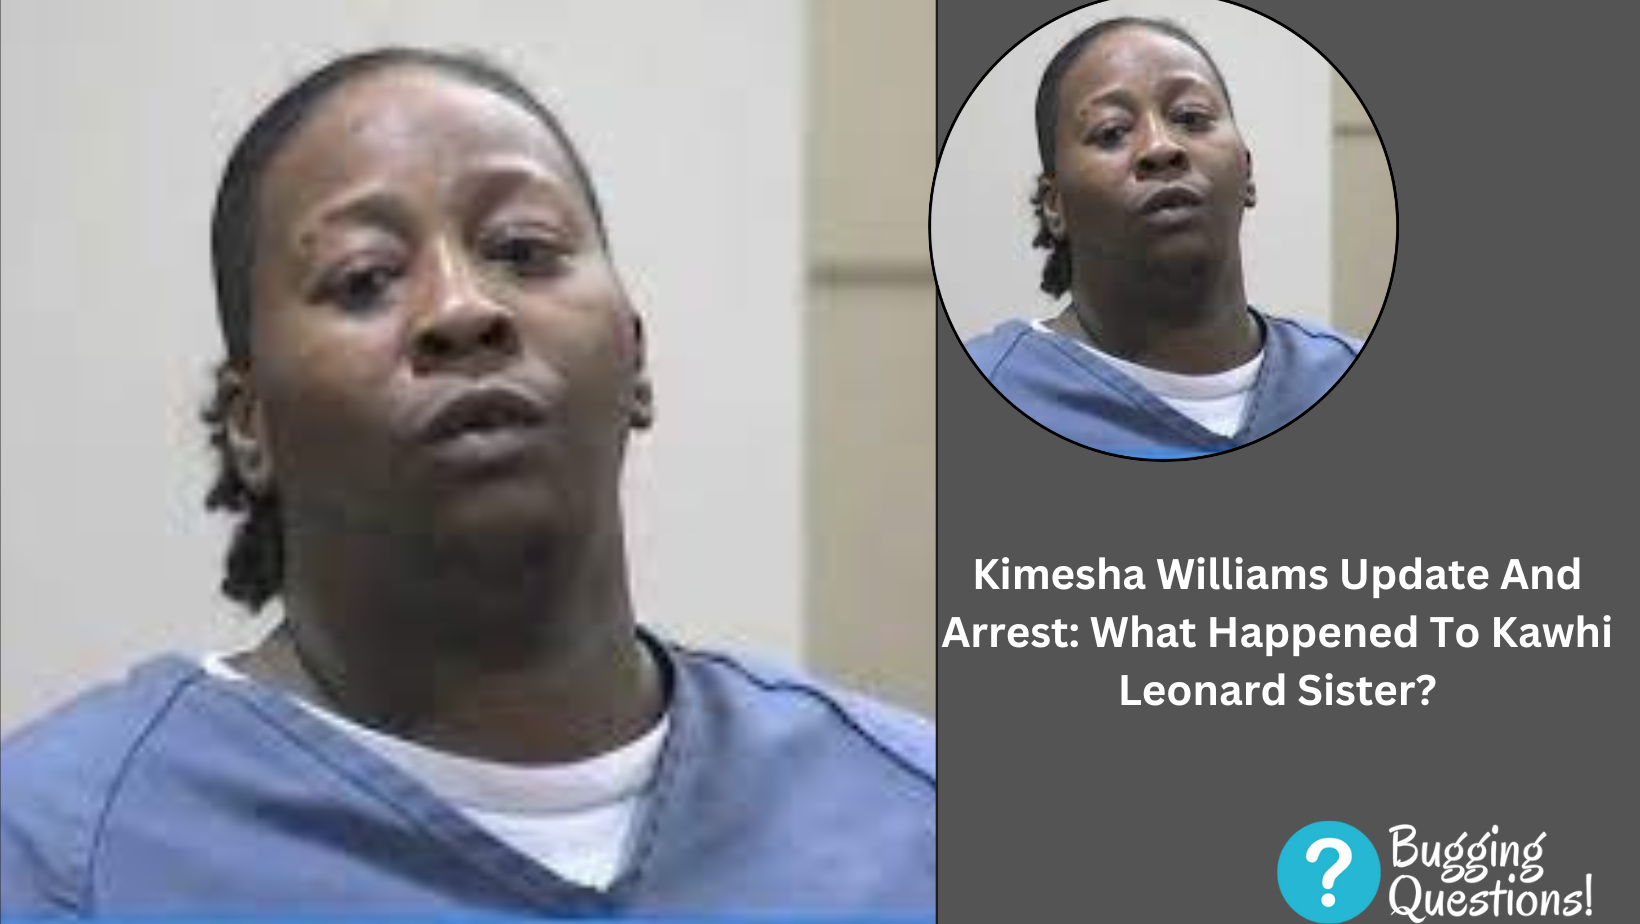 Kimesha Williams Update And Arrest